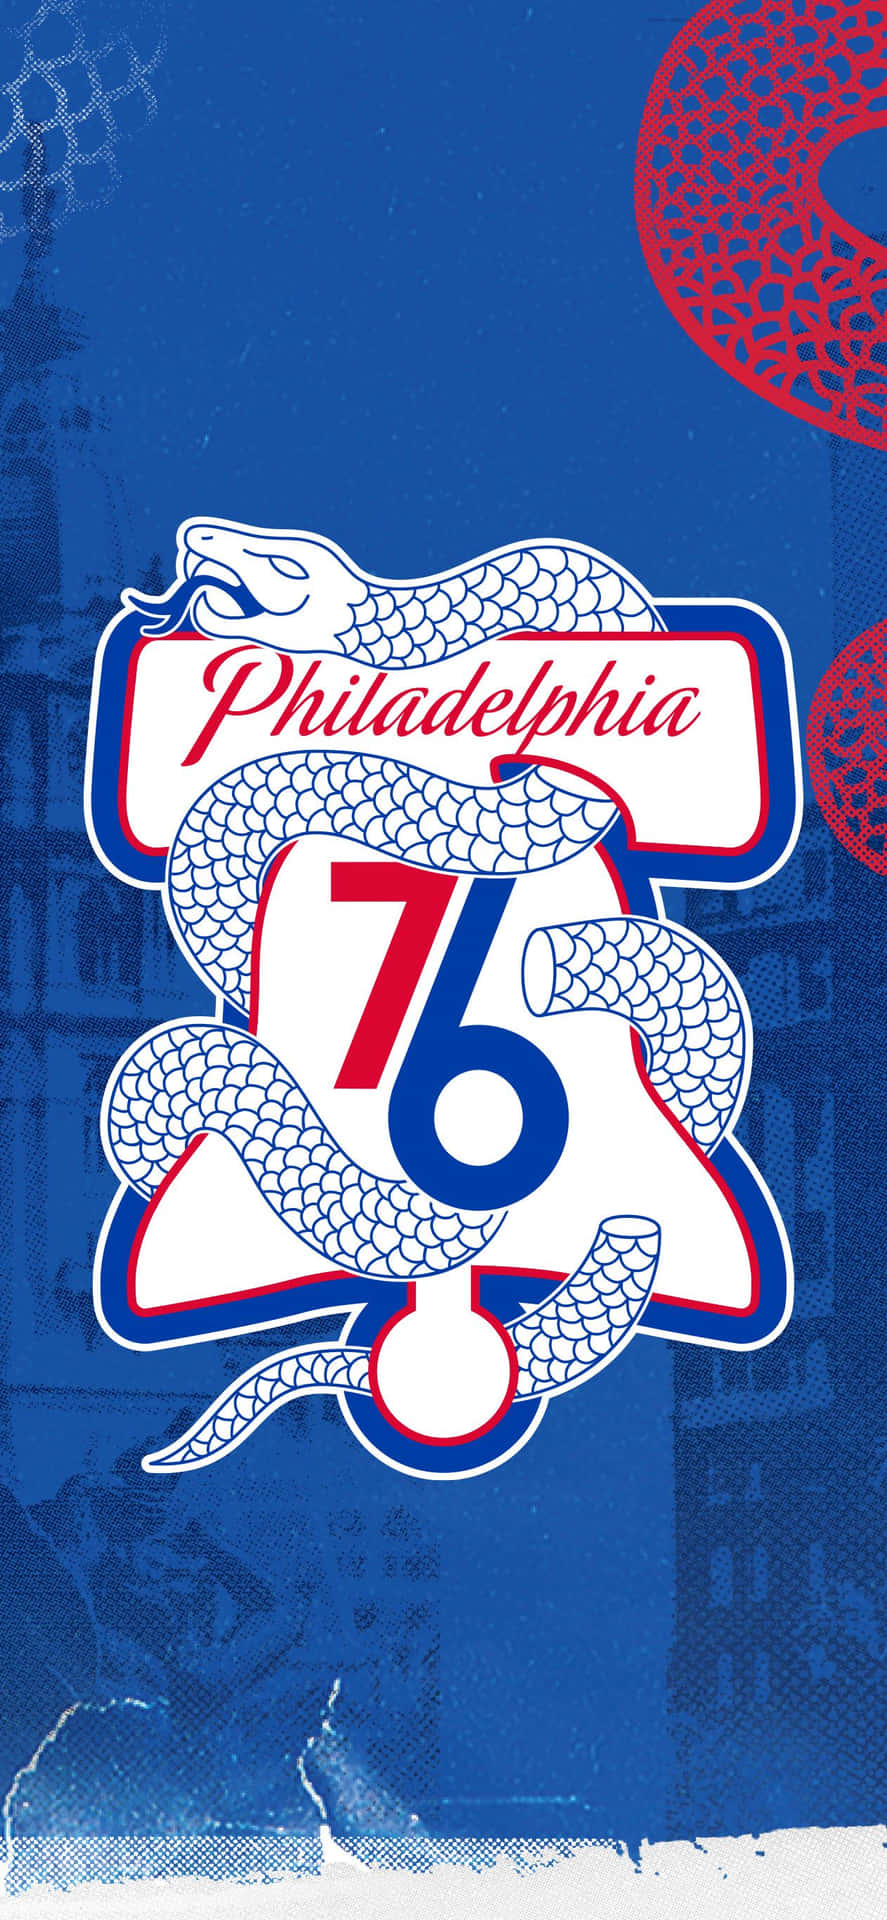 7 Philadelphia 76ers iPhone wallpapers ideas